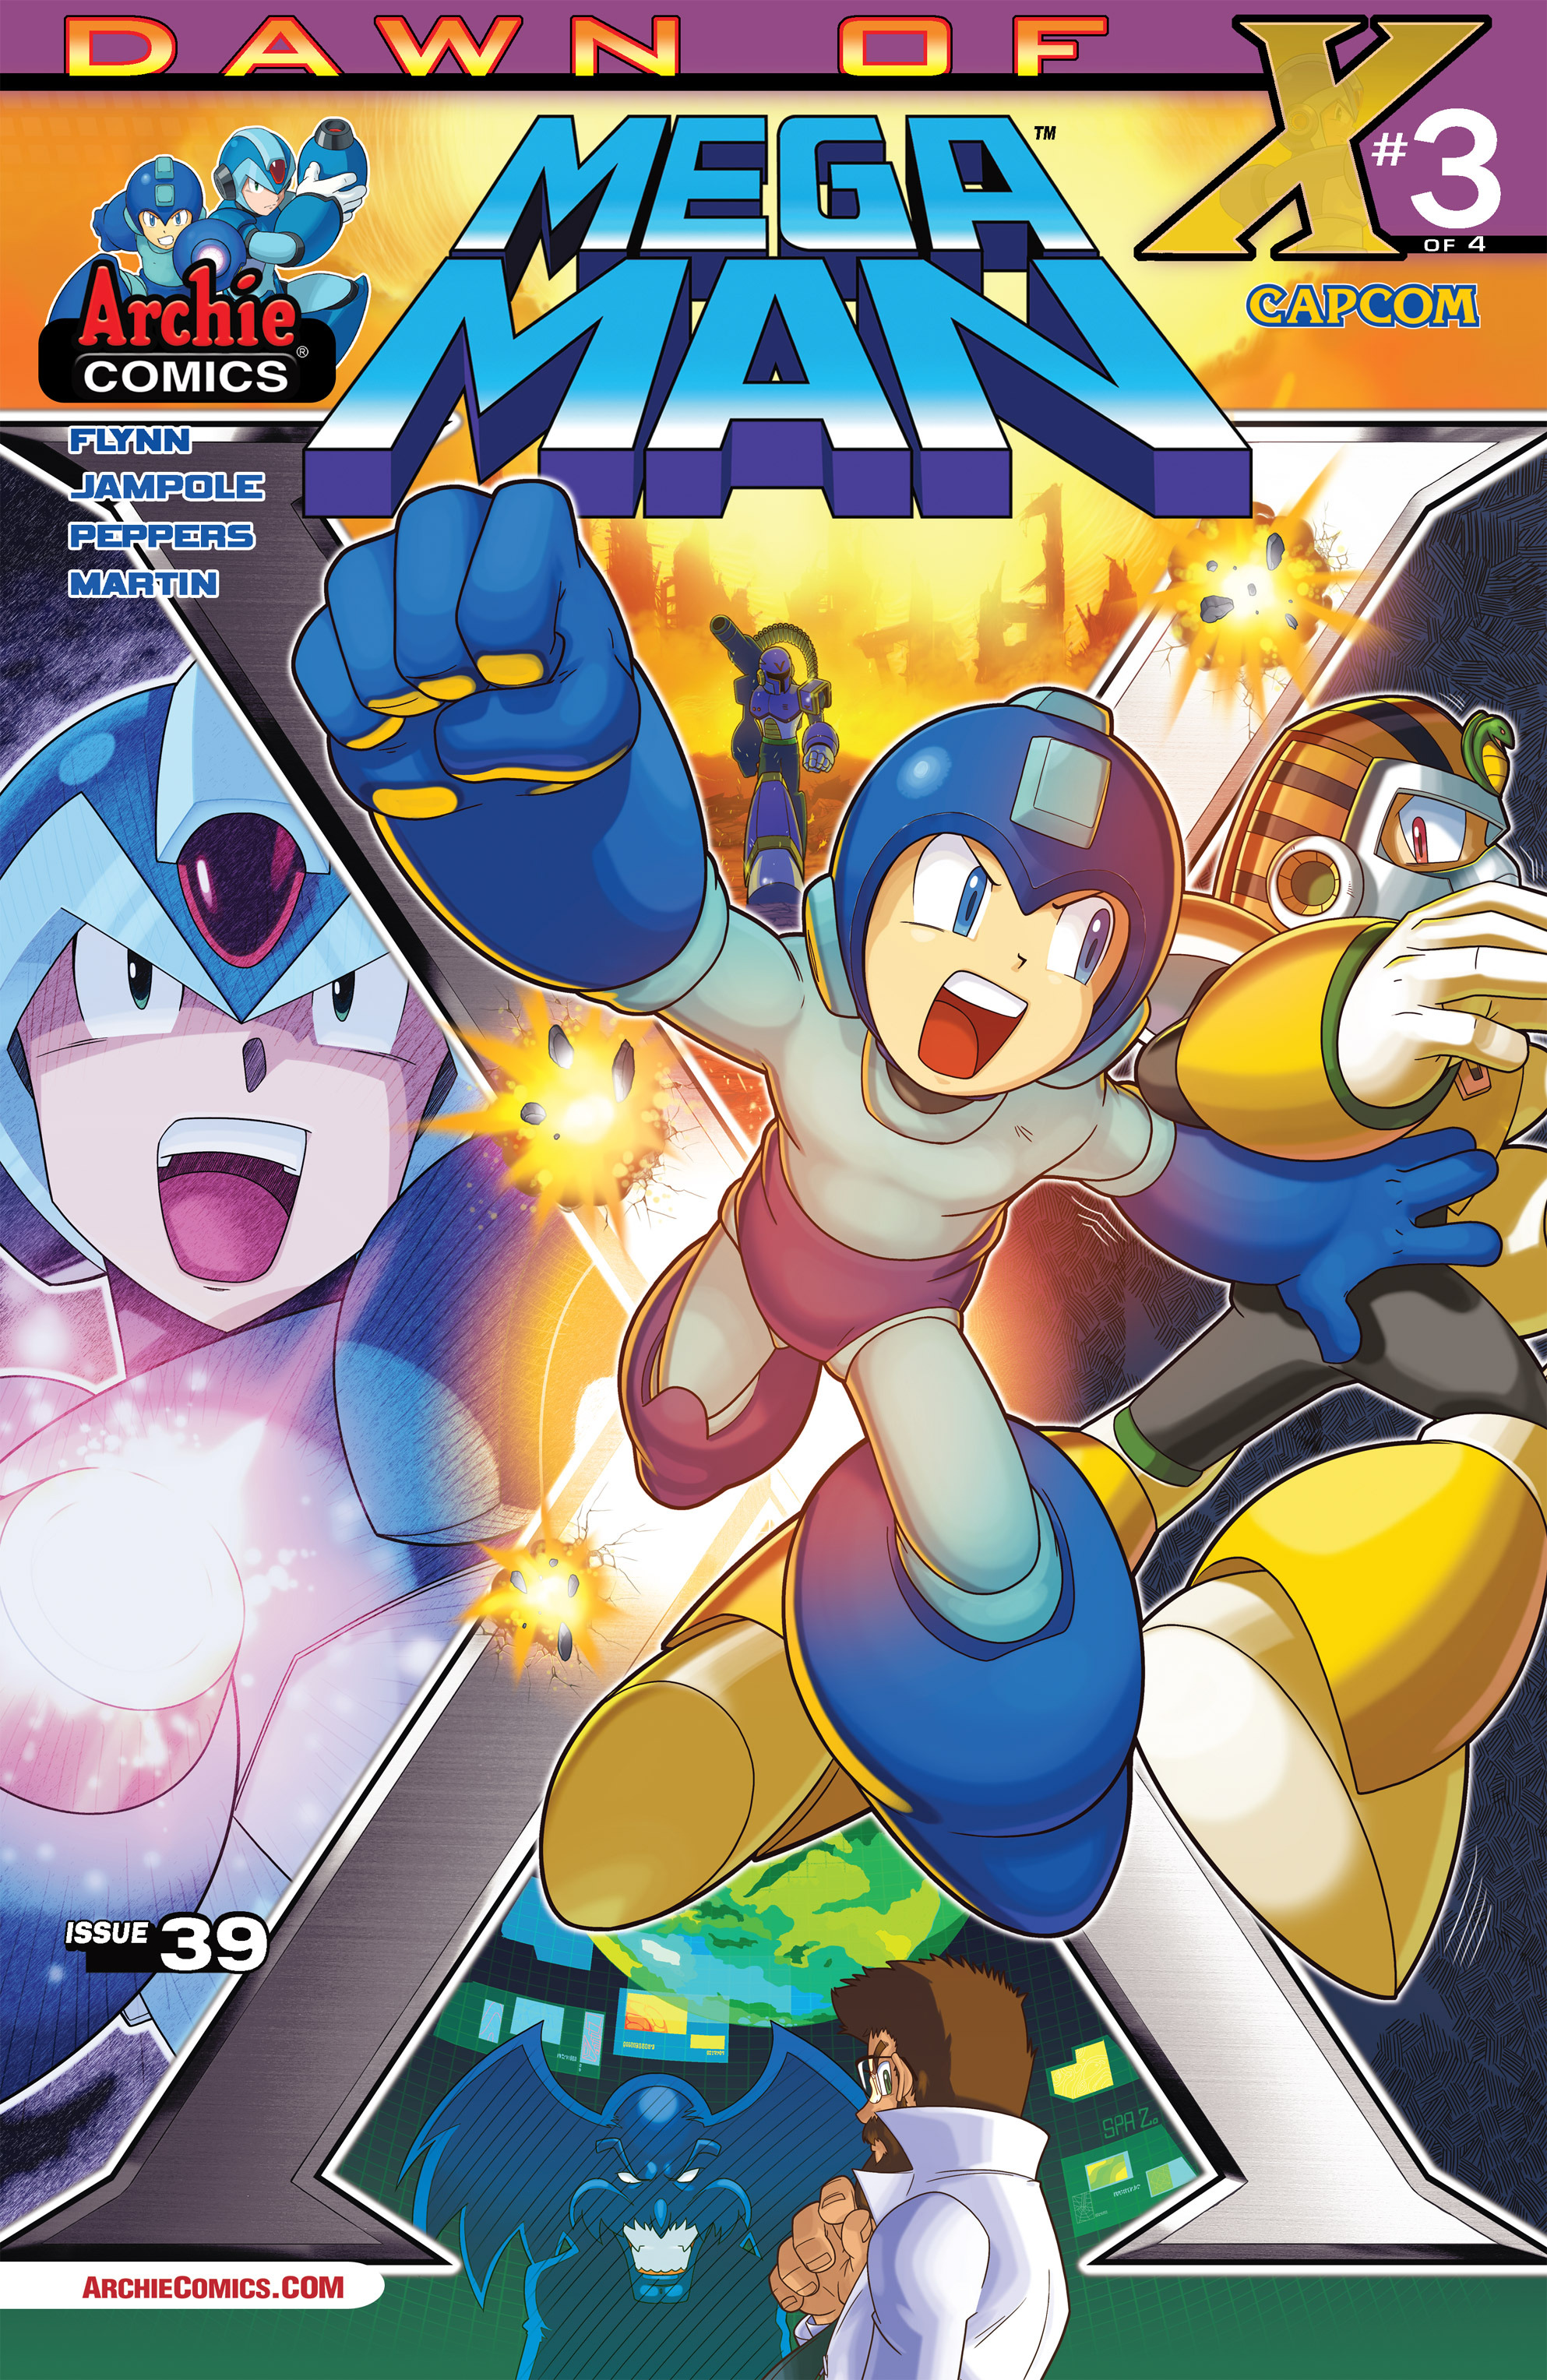 Mega Man Issue 39 (Archie Comics) | MMKB | FANDOM powered ...